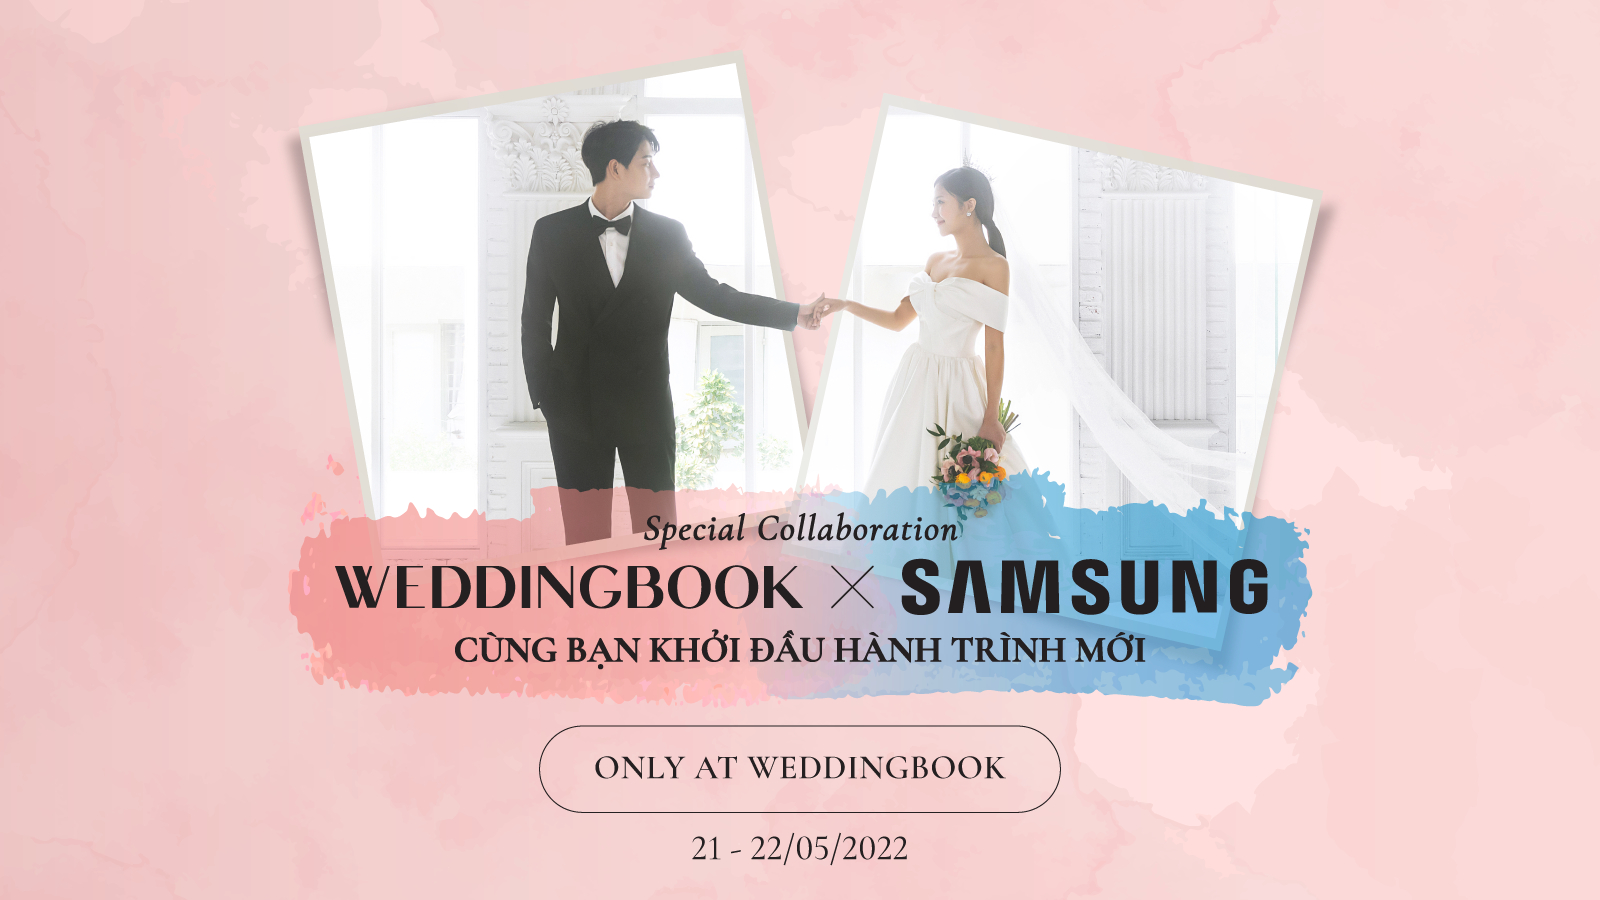 WEDDINGBOOK & Samsung - Wedding exhibition from two Korean brands - Photo 4.